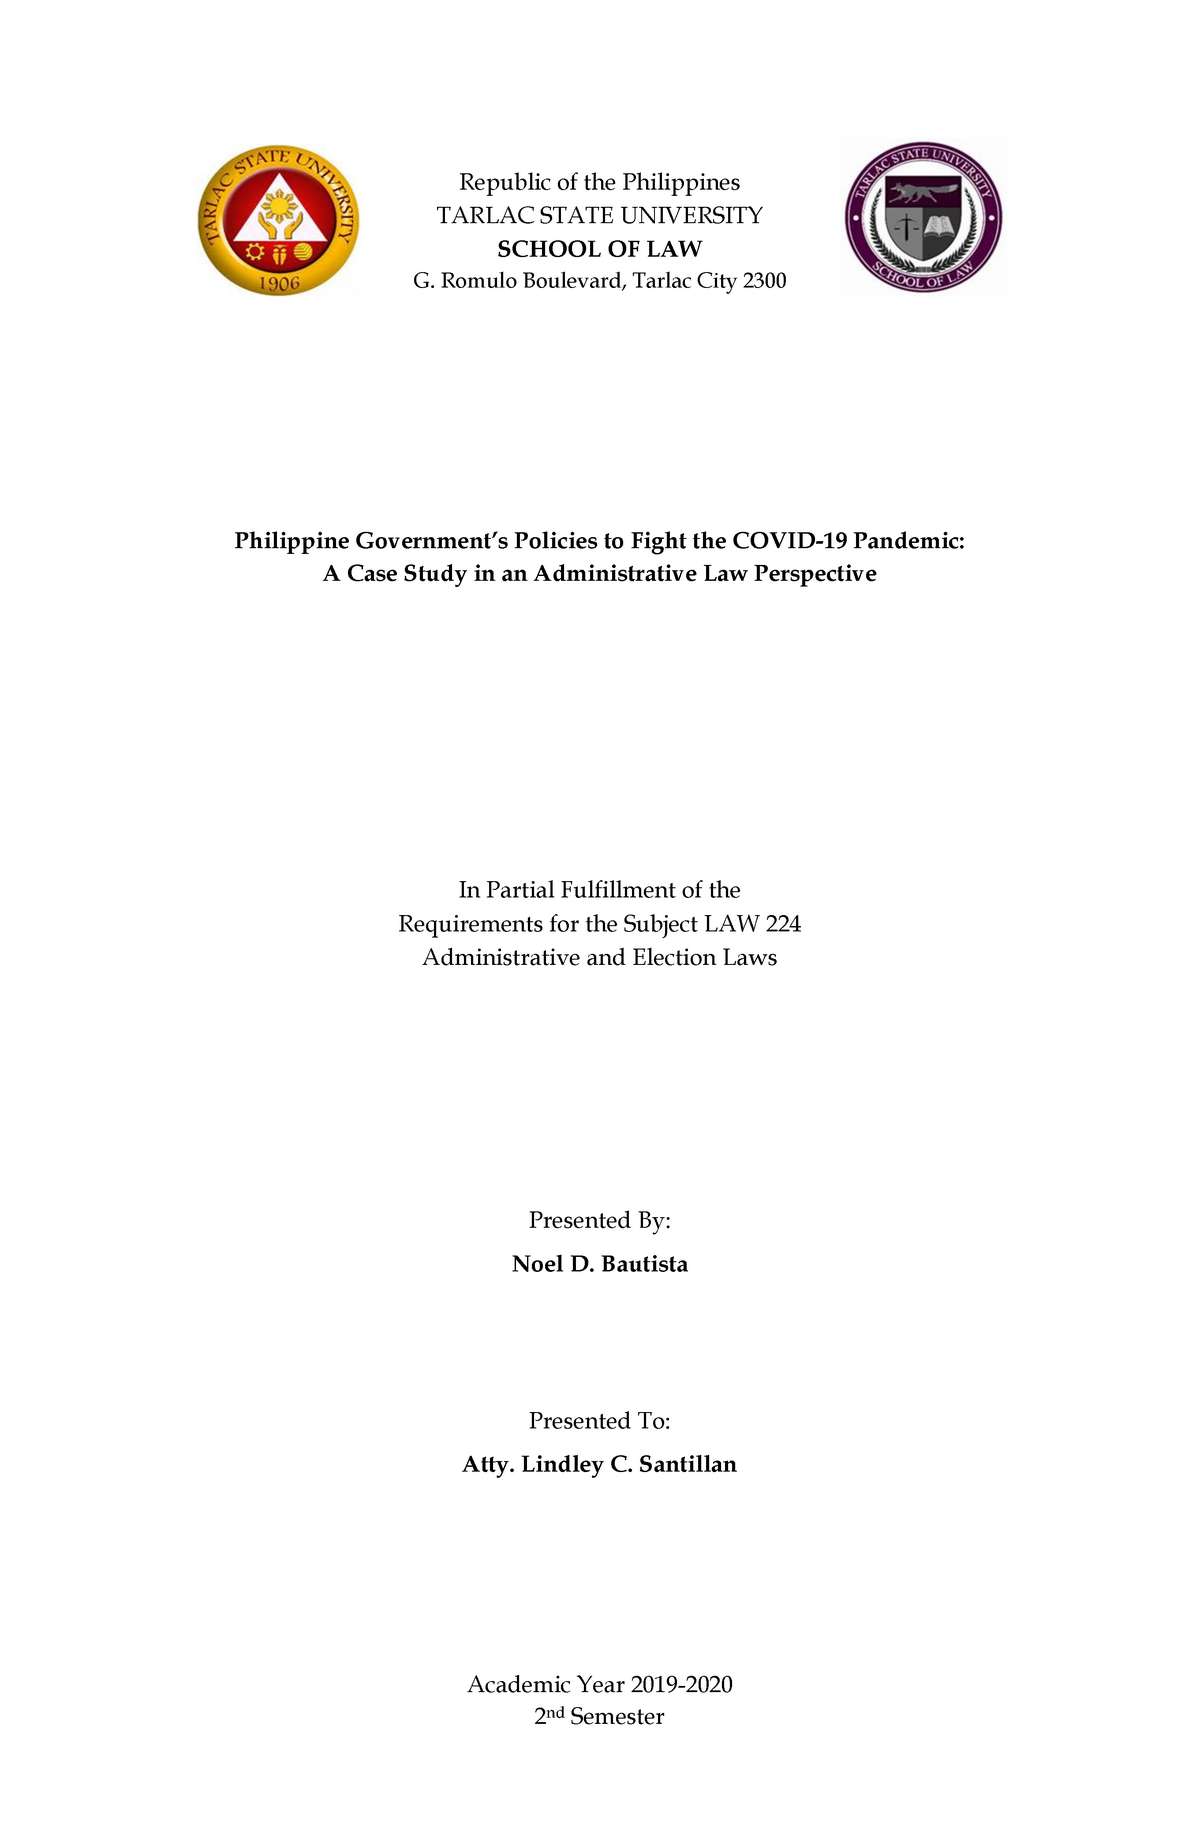 law case study philippines